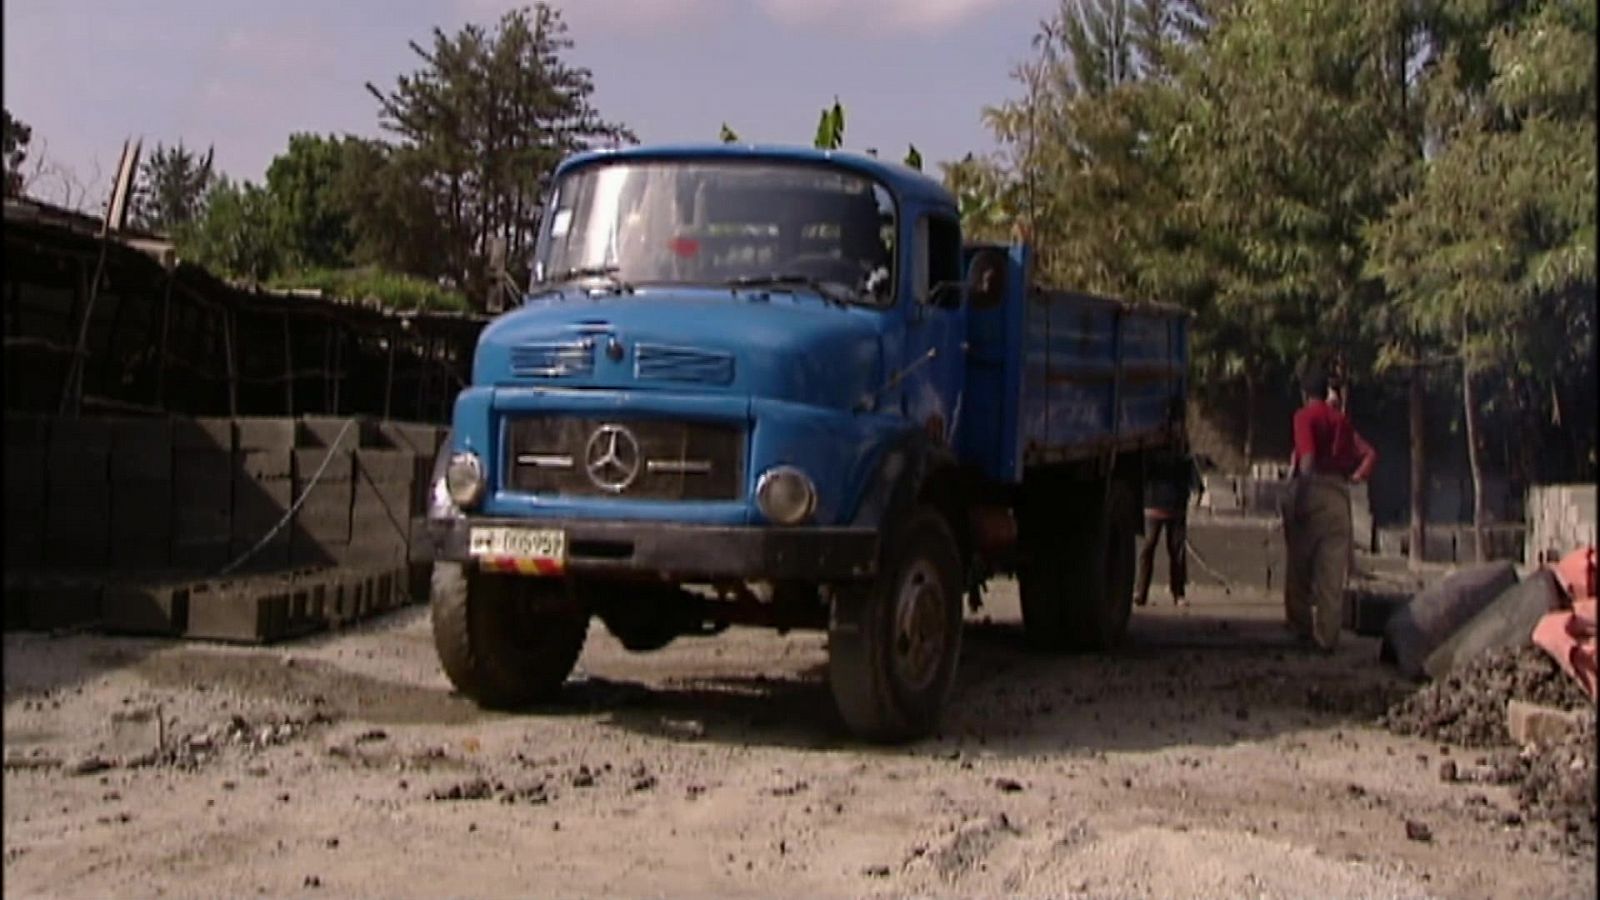 Trucks - Solidaridad etíope (Etiopía) - Documental en RTVE